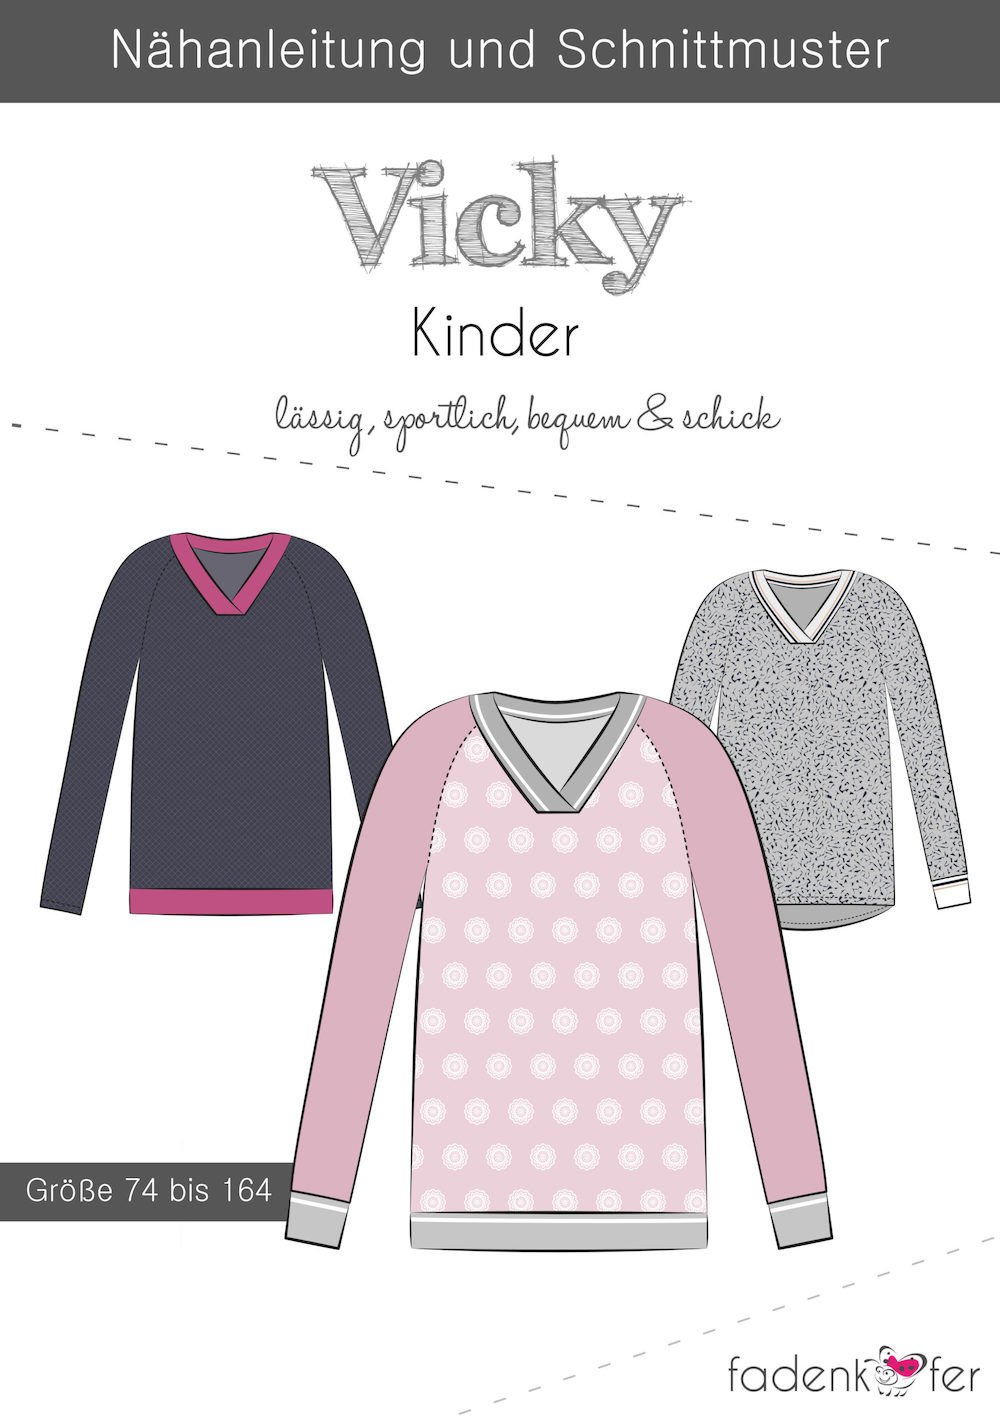 Papierschnittmuster Shirt Vicky Kinder - Gr. 74-164 - Nähanleitung und Schnittmuster von Fadenkäfer 